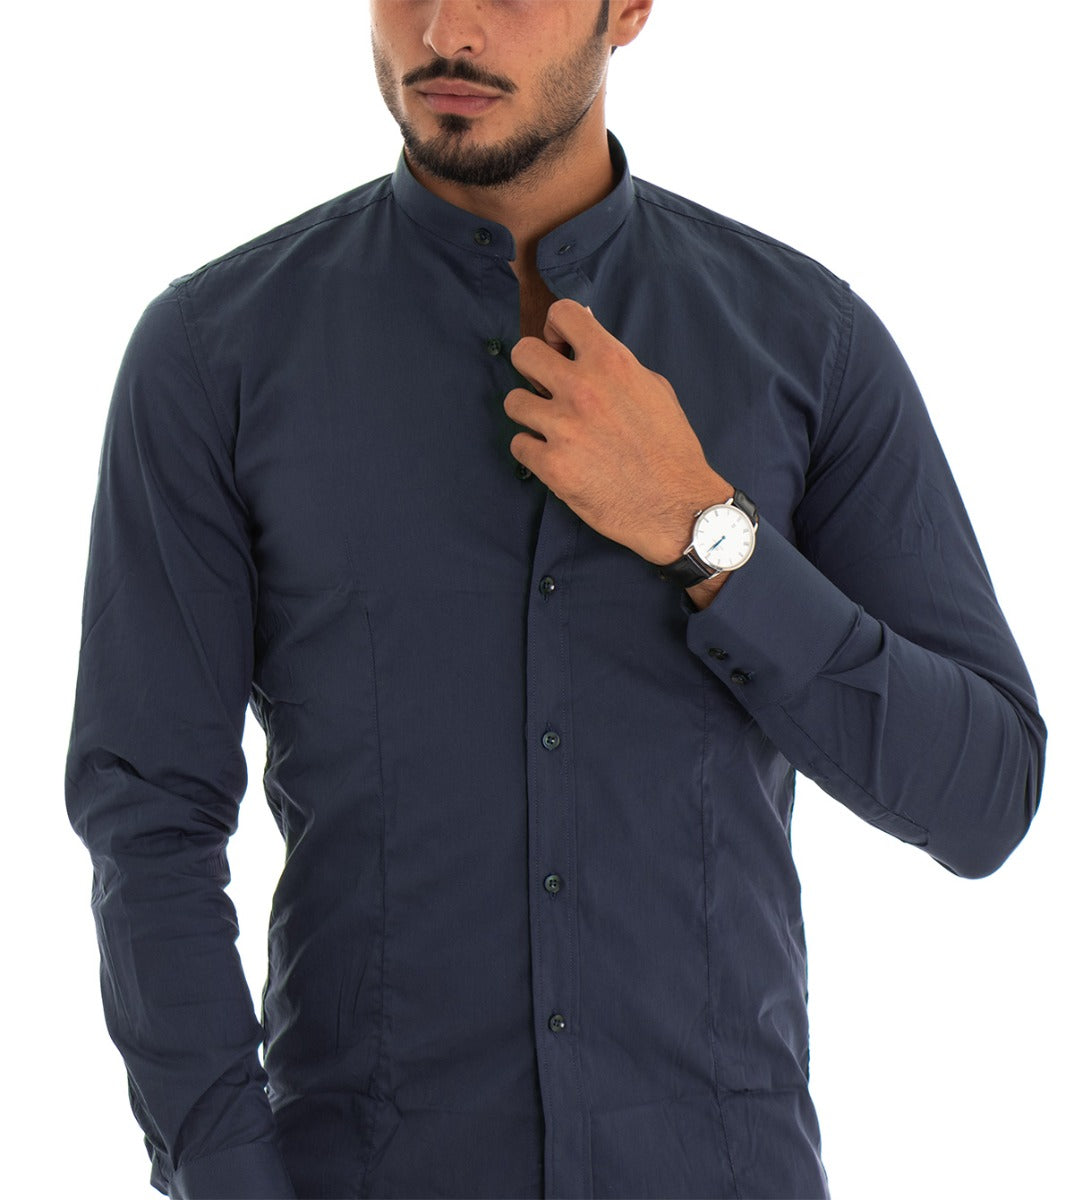 Men's Mandarin Collar Shirt Long Sleeve Slim Fit Basic Casual Cotton Blue GIOSAL-C1819A